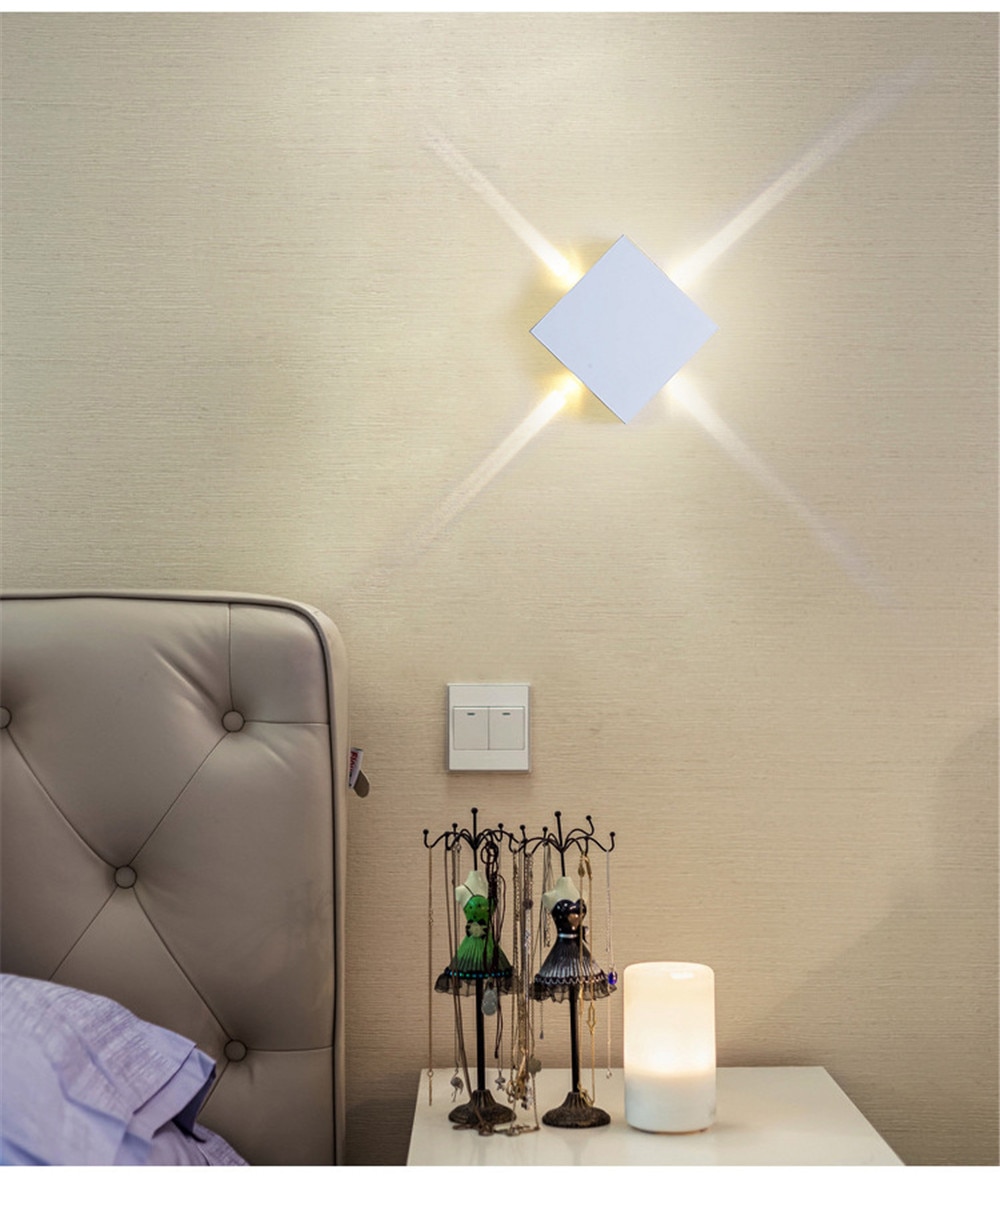 Led wall lamp bedside lamp bedroom living room wall lamp modern simple creative corridor hotel cross star wall light ac85-265v